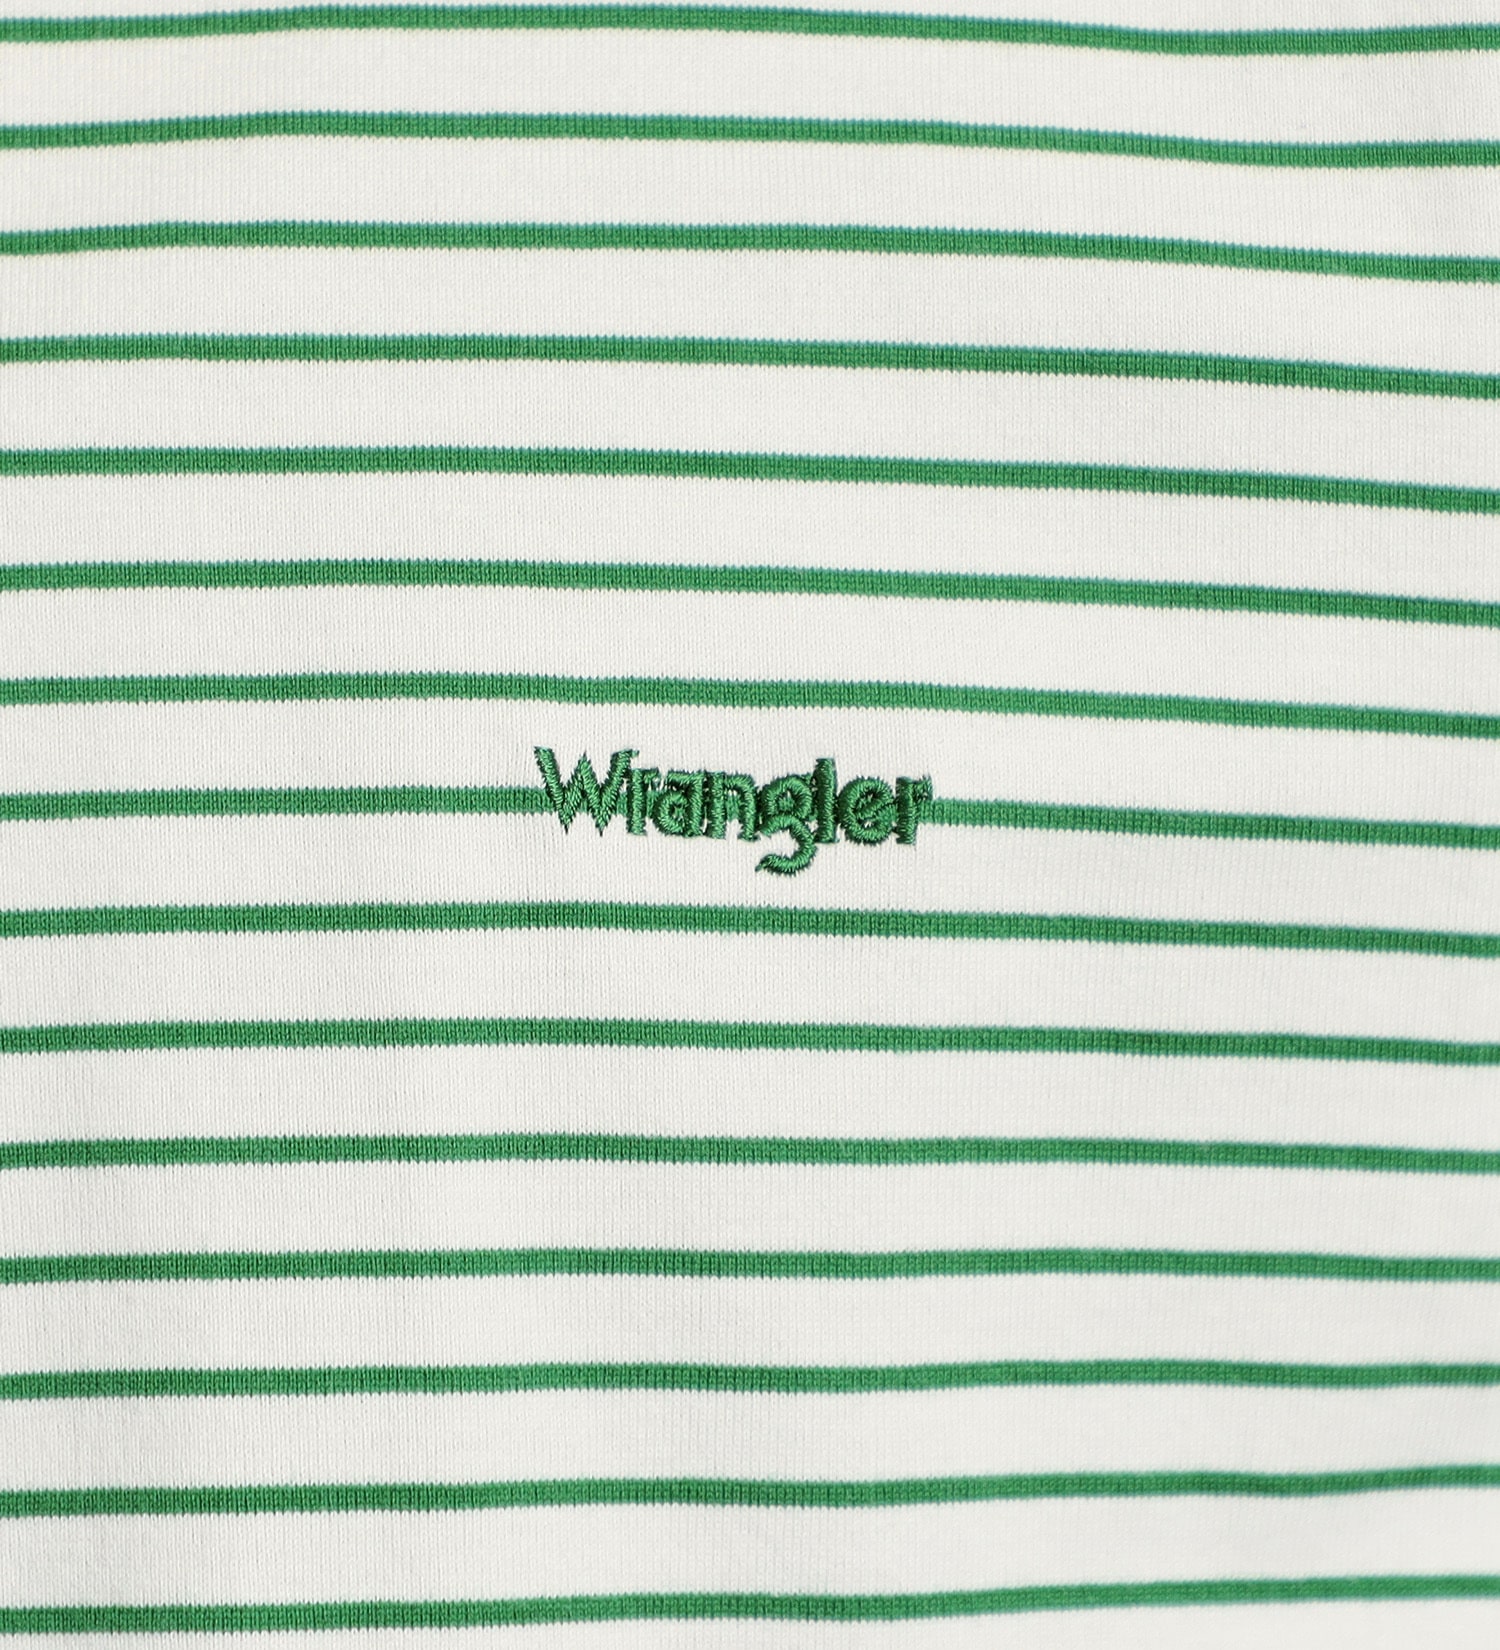 Wrangler(ラングラー)のボーダーリンガー ショートスリーブTee|トップス/Tシャツ/カットソー/メンズ|グリーン